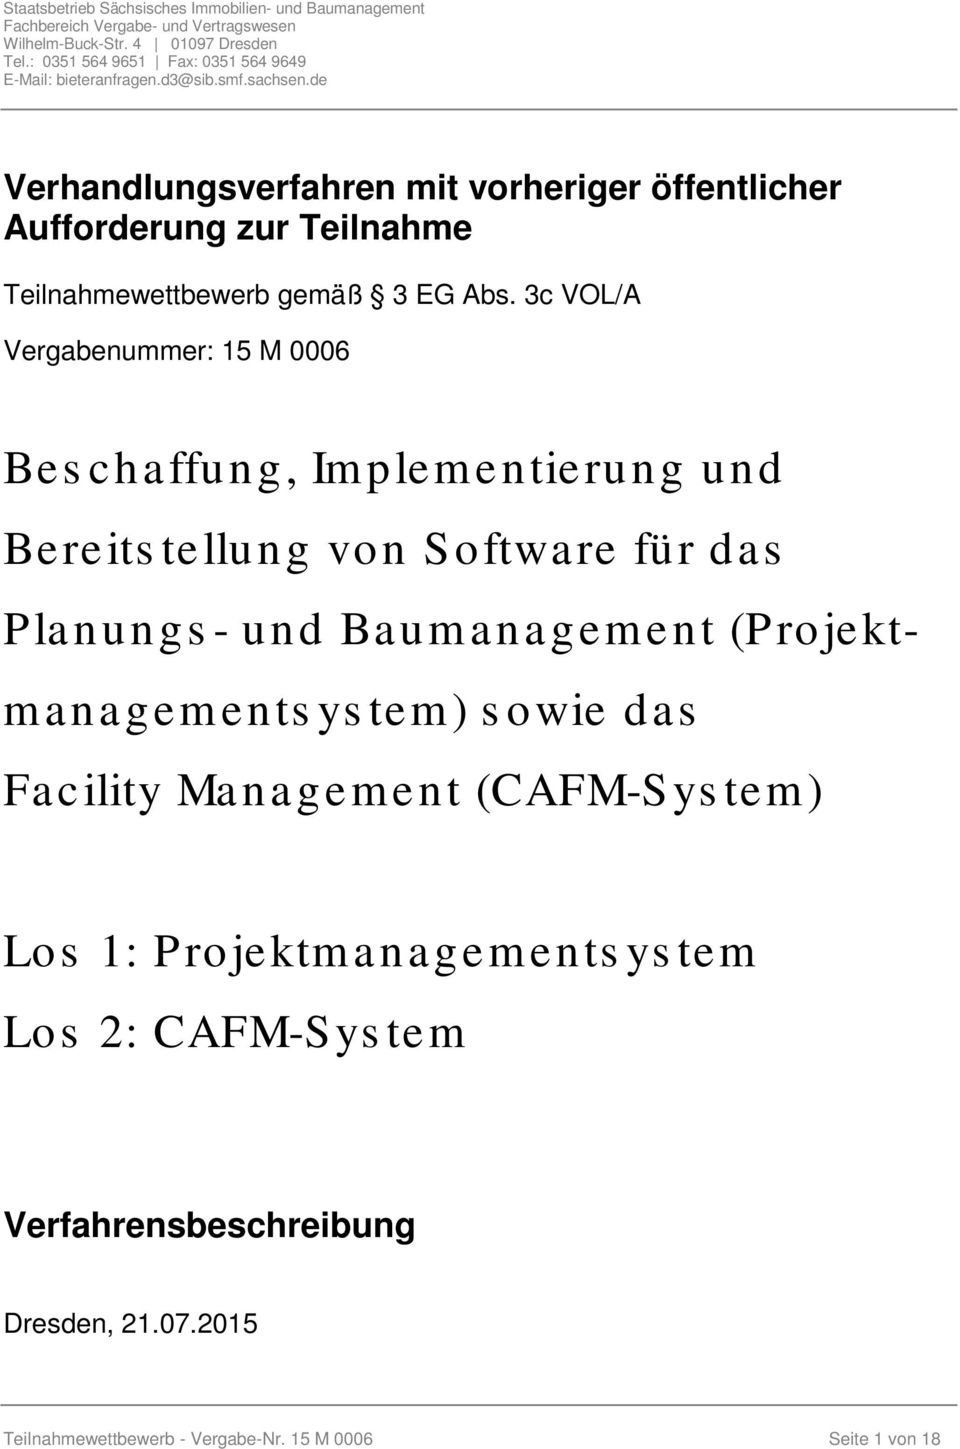 und Baumanagement (Prjektmanagementsystem) swie das Facility Management (CAFM-System) Ls 1: